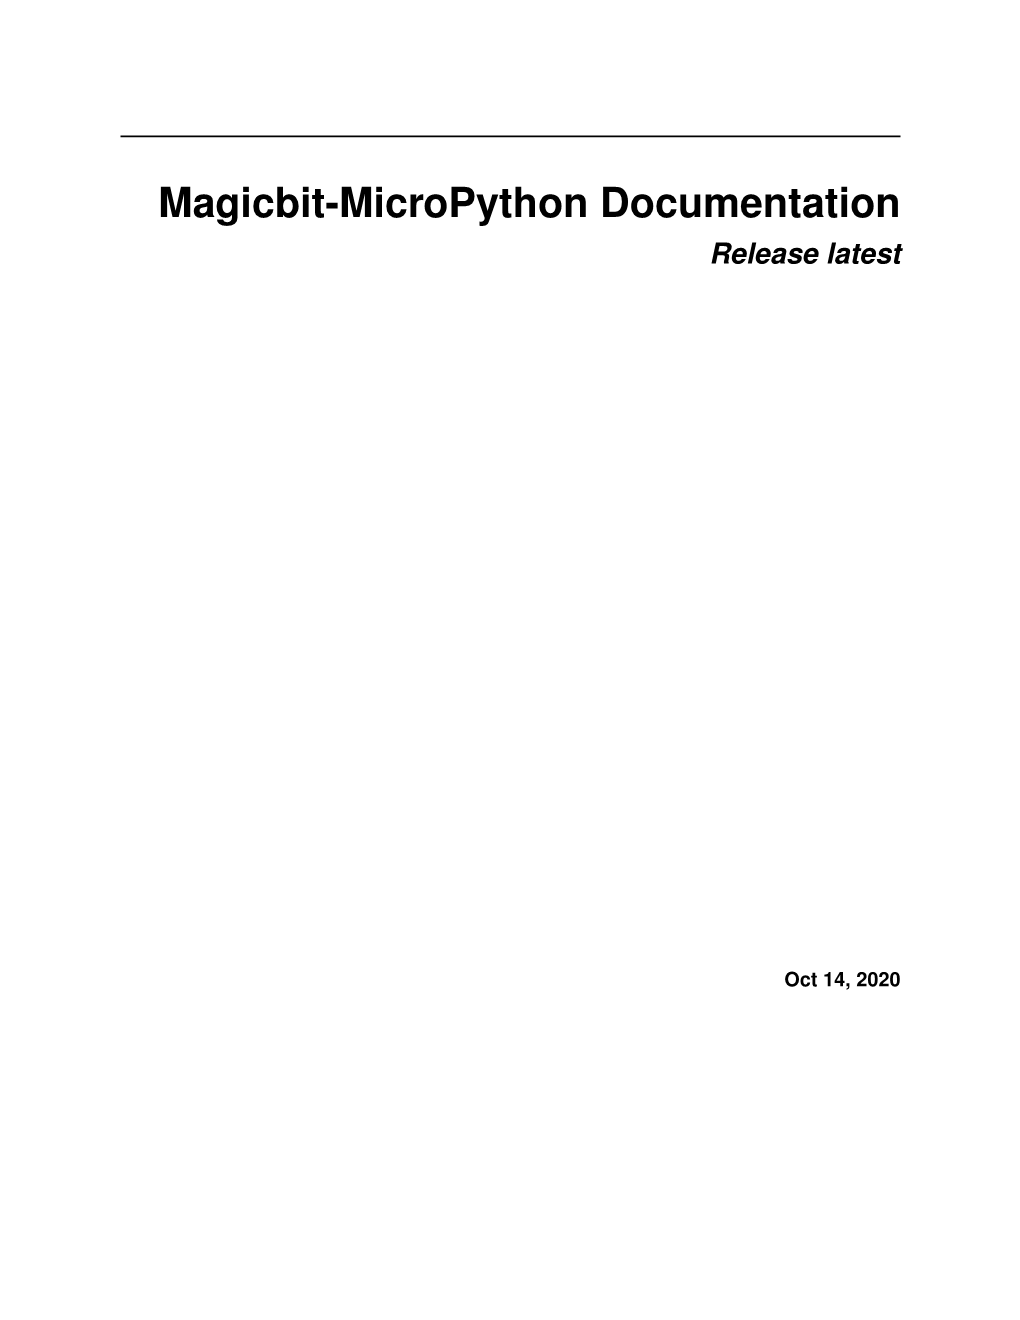 Magicbit-Micropython Documentation Release Latest